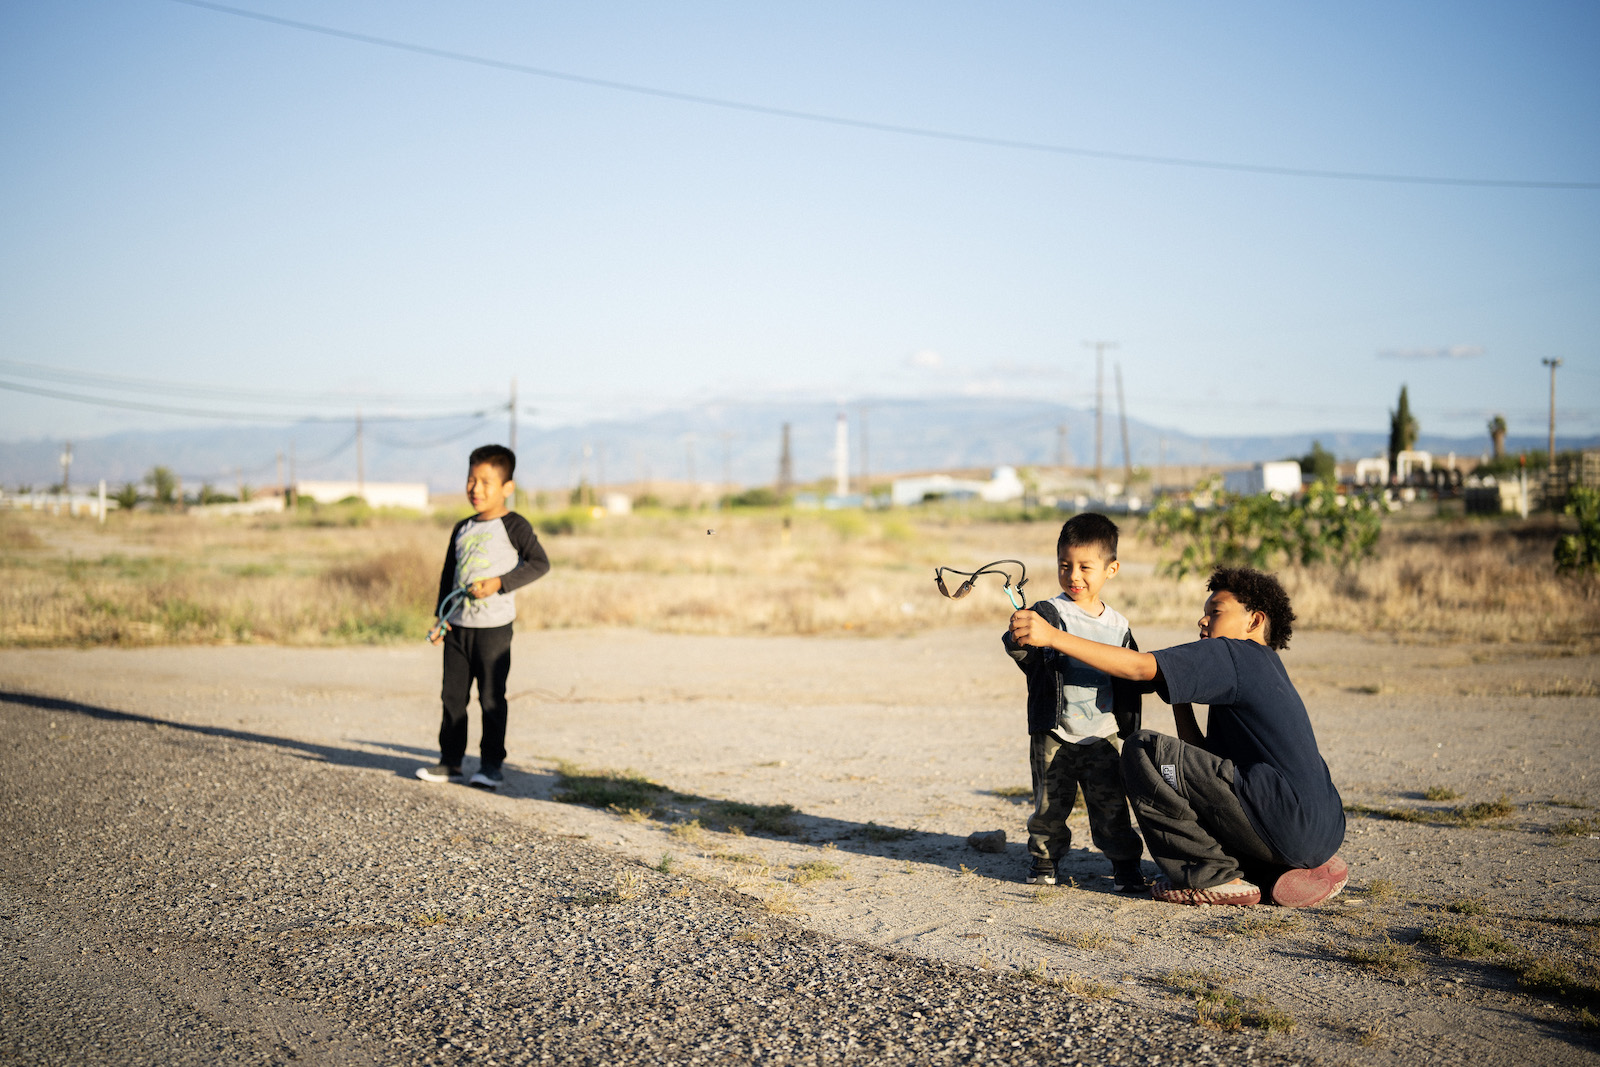 Three kids play with slingshots near rolling dirt hills